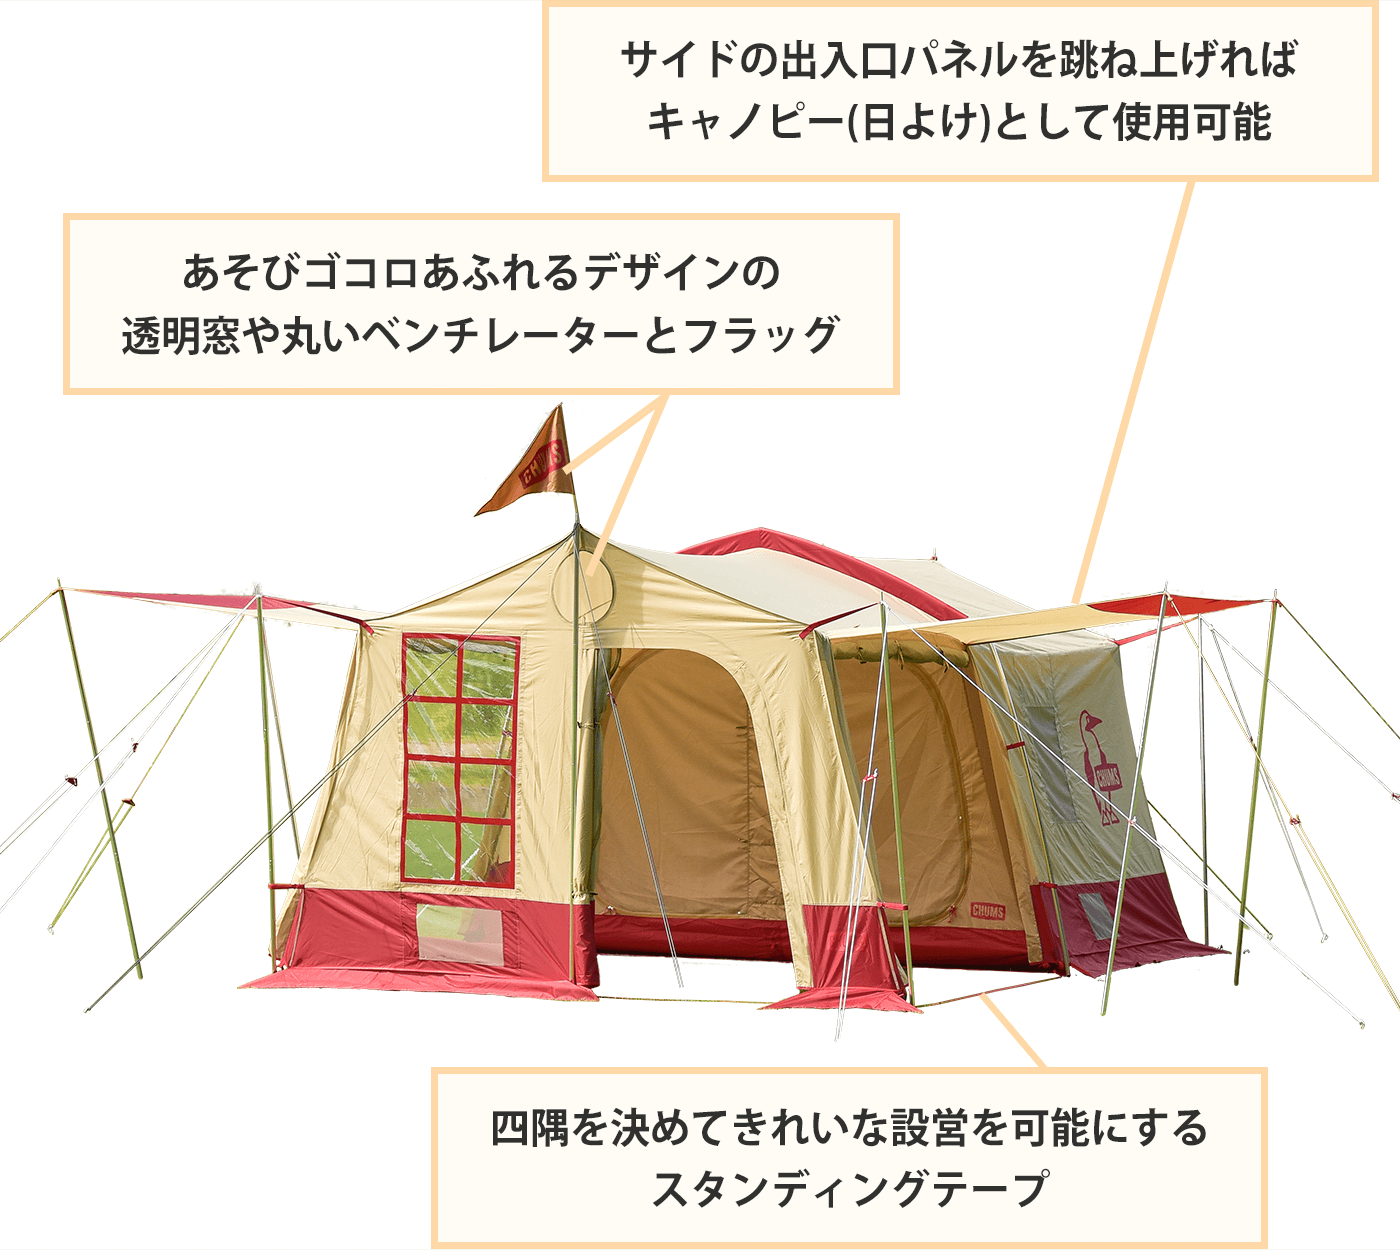 Booby Cabin Tent 4 各部位の機能